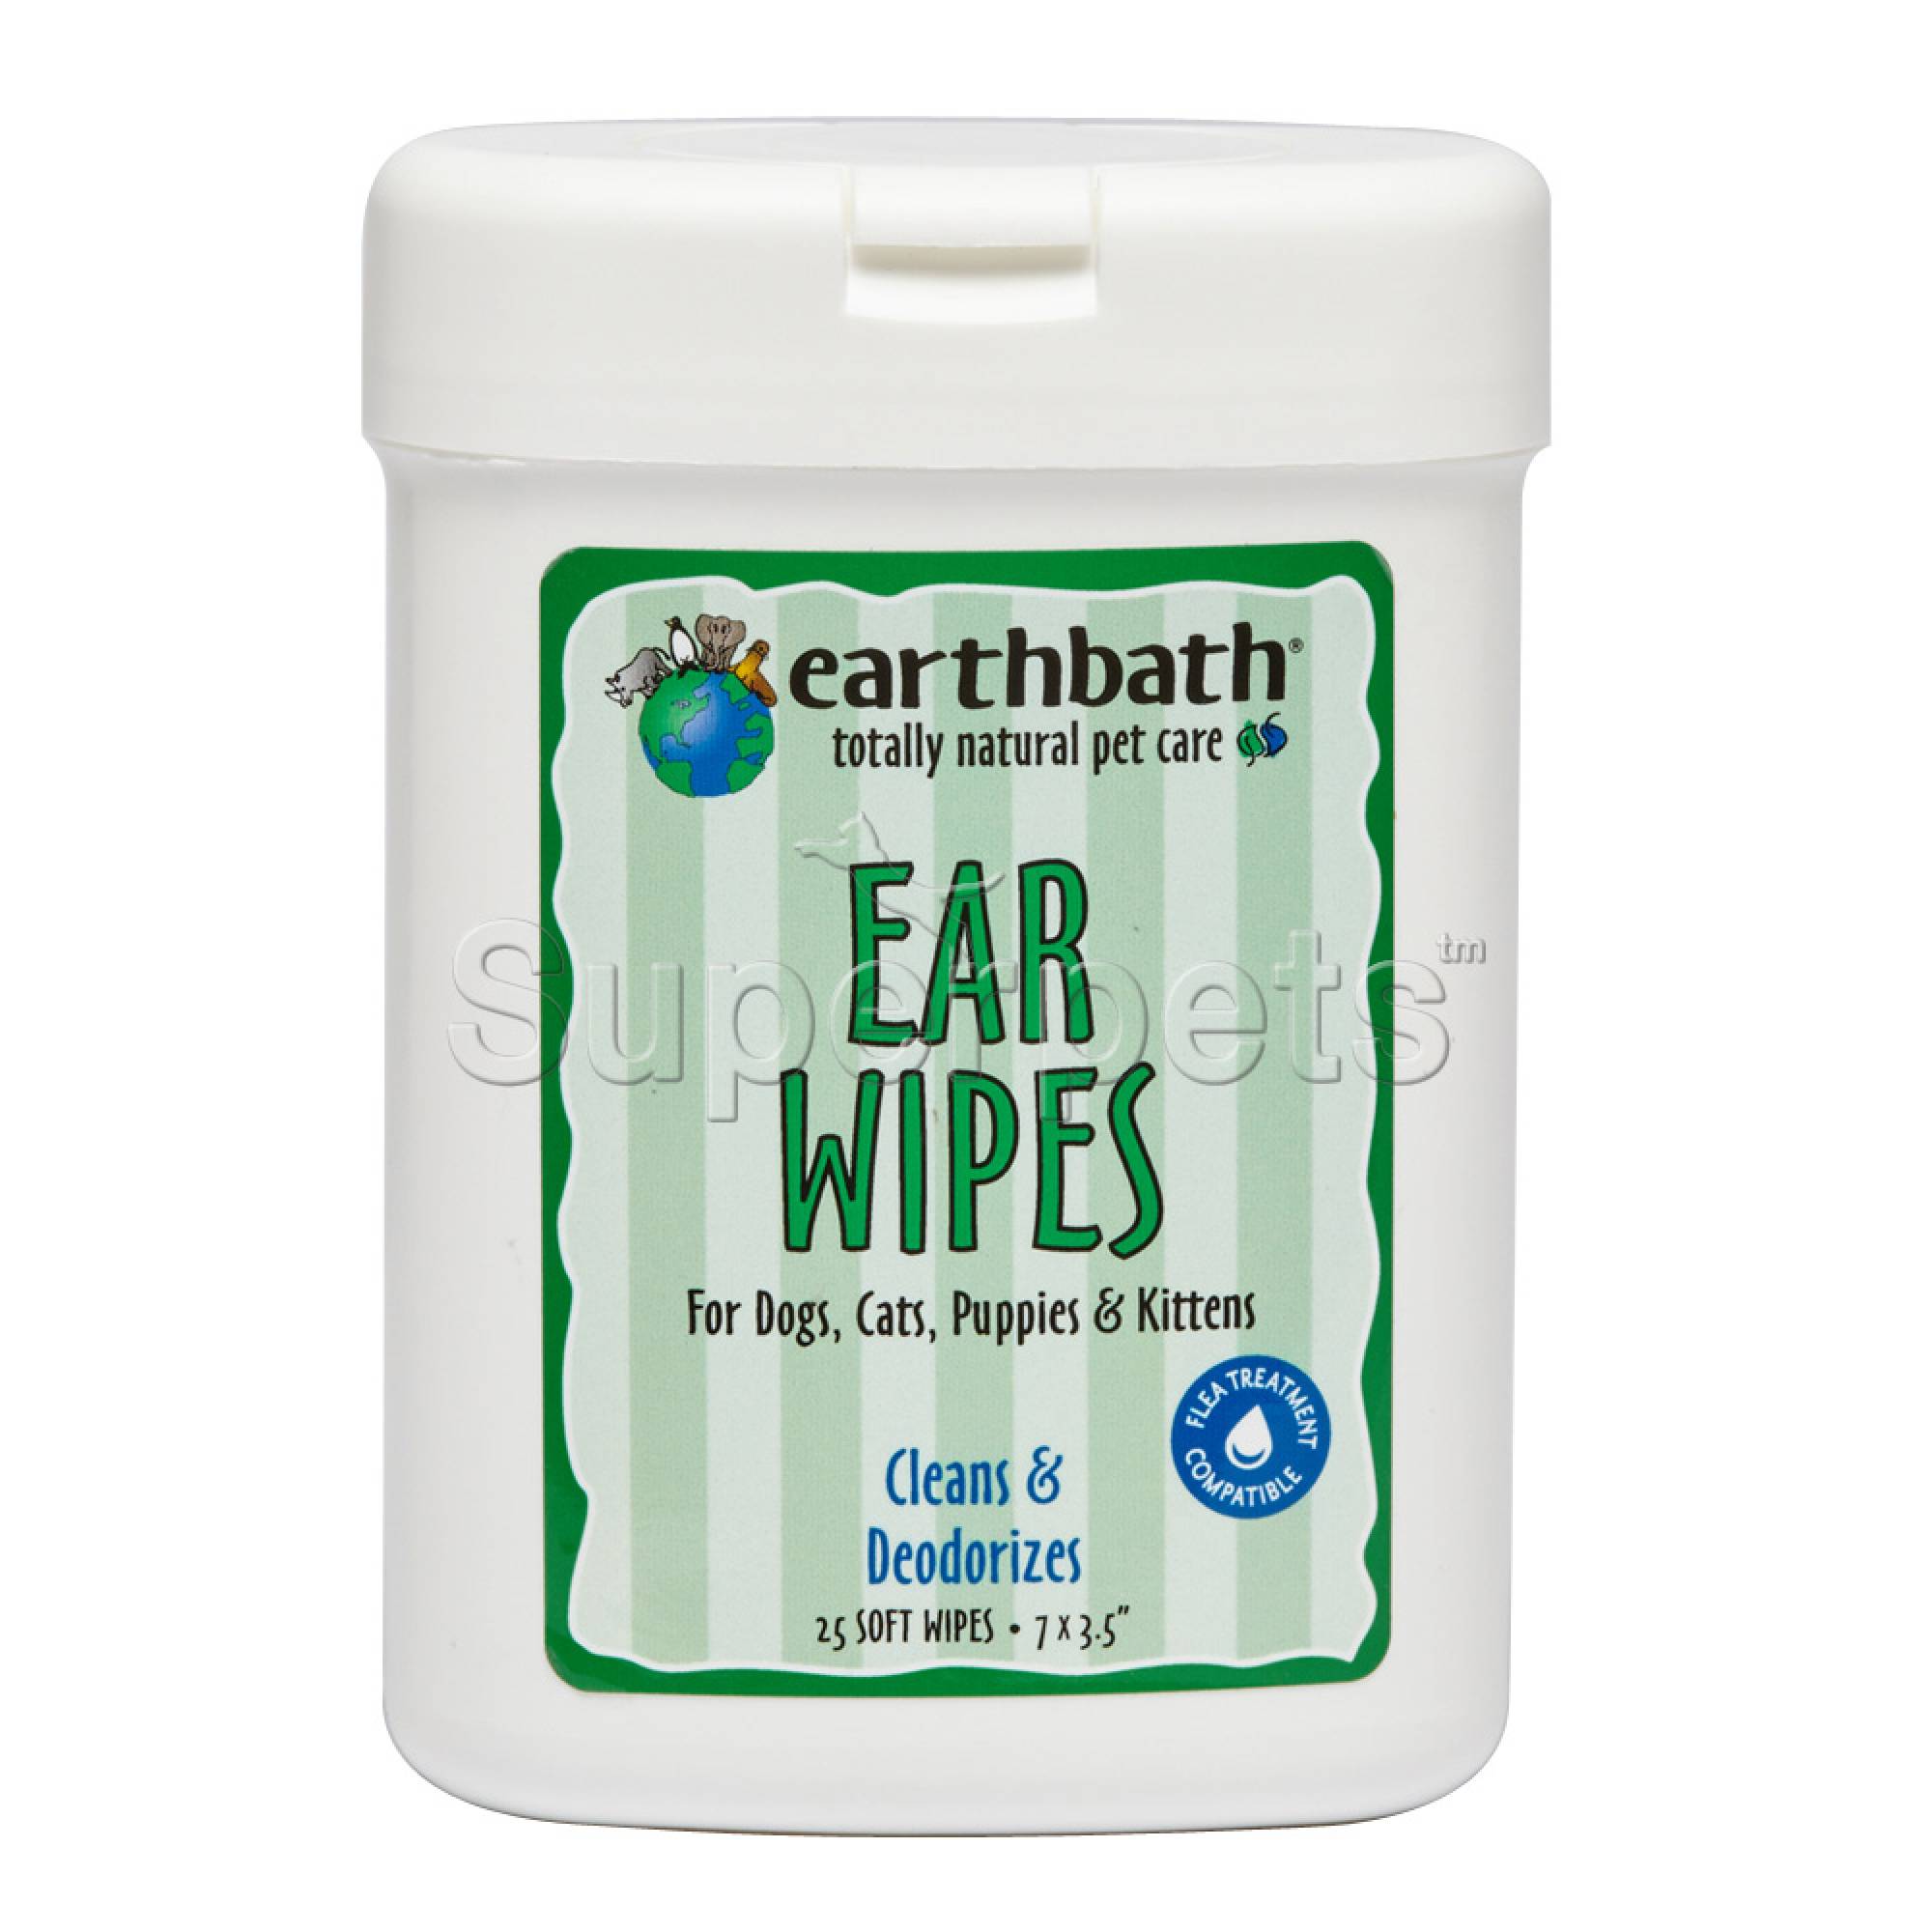 Earthbath EB041 Ear Wipes 25pcs